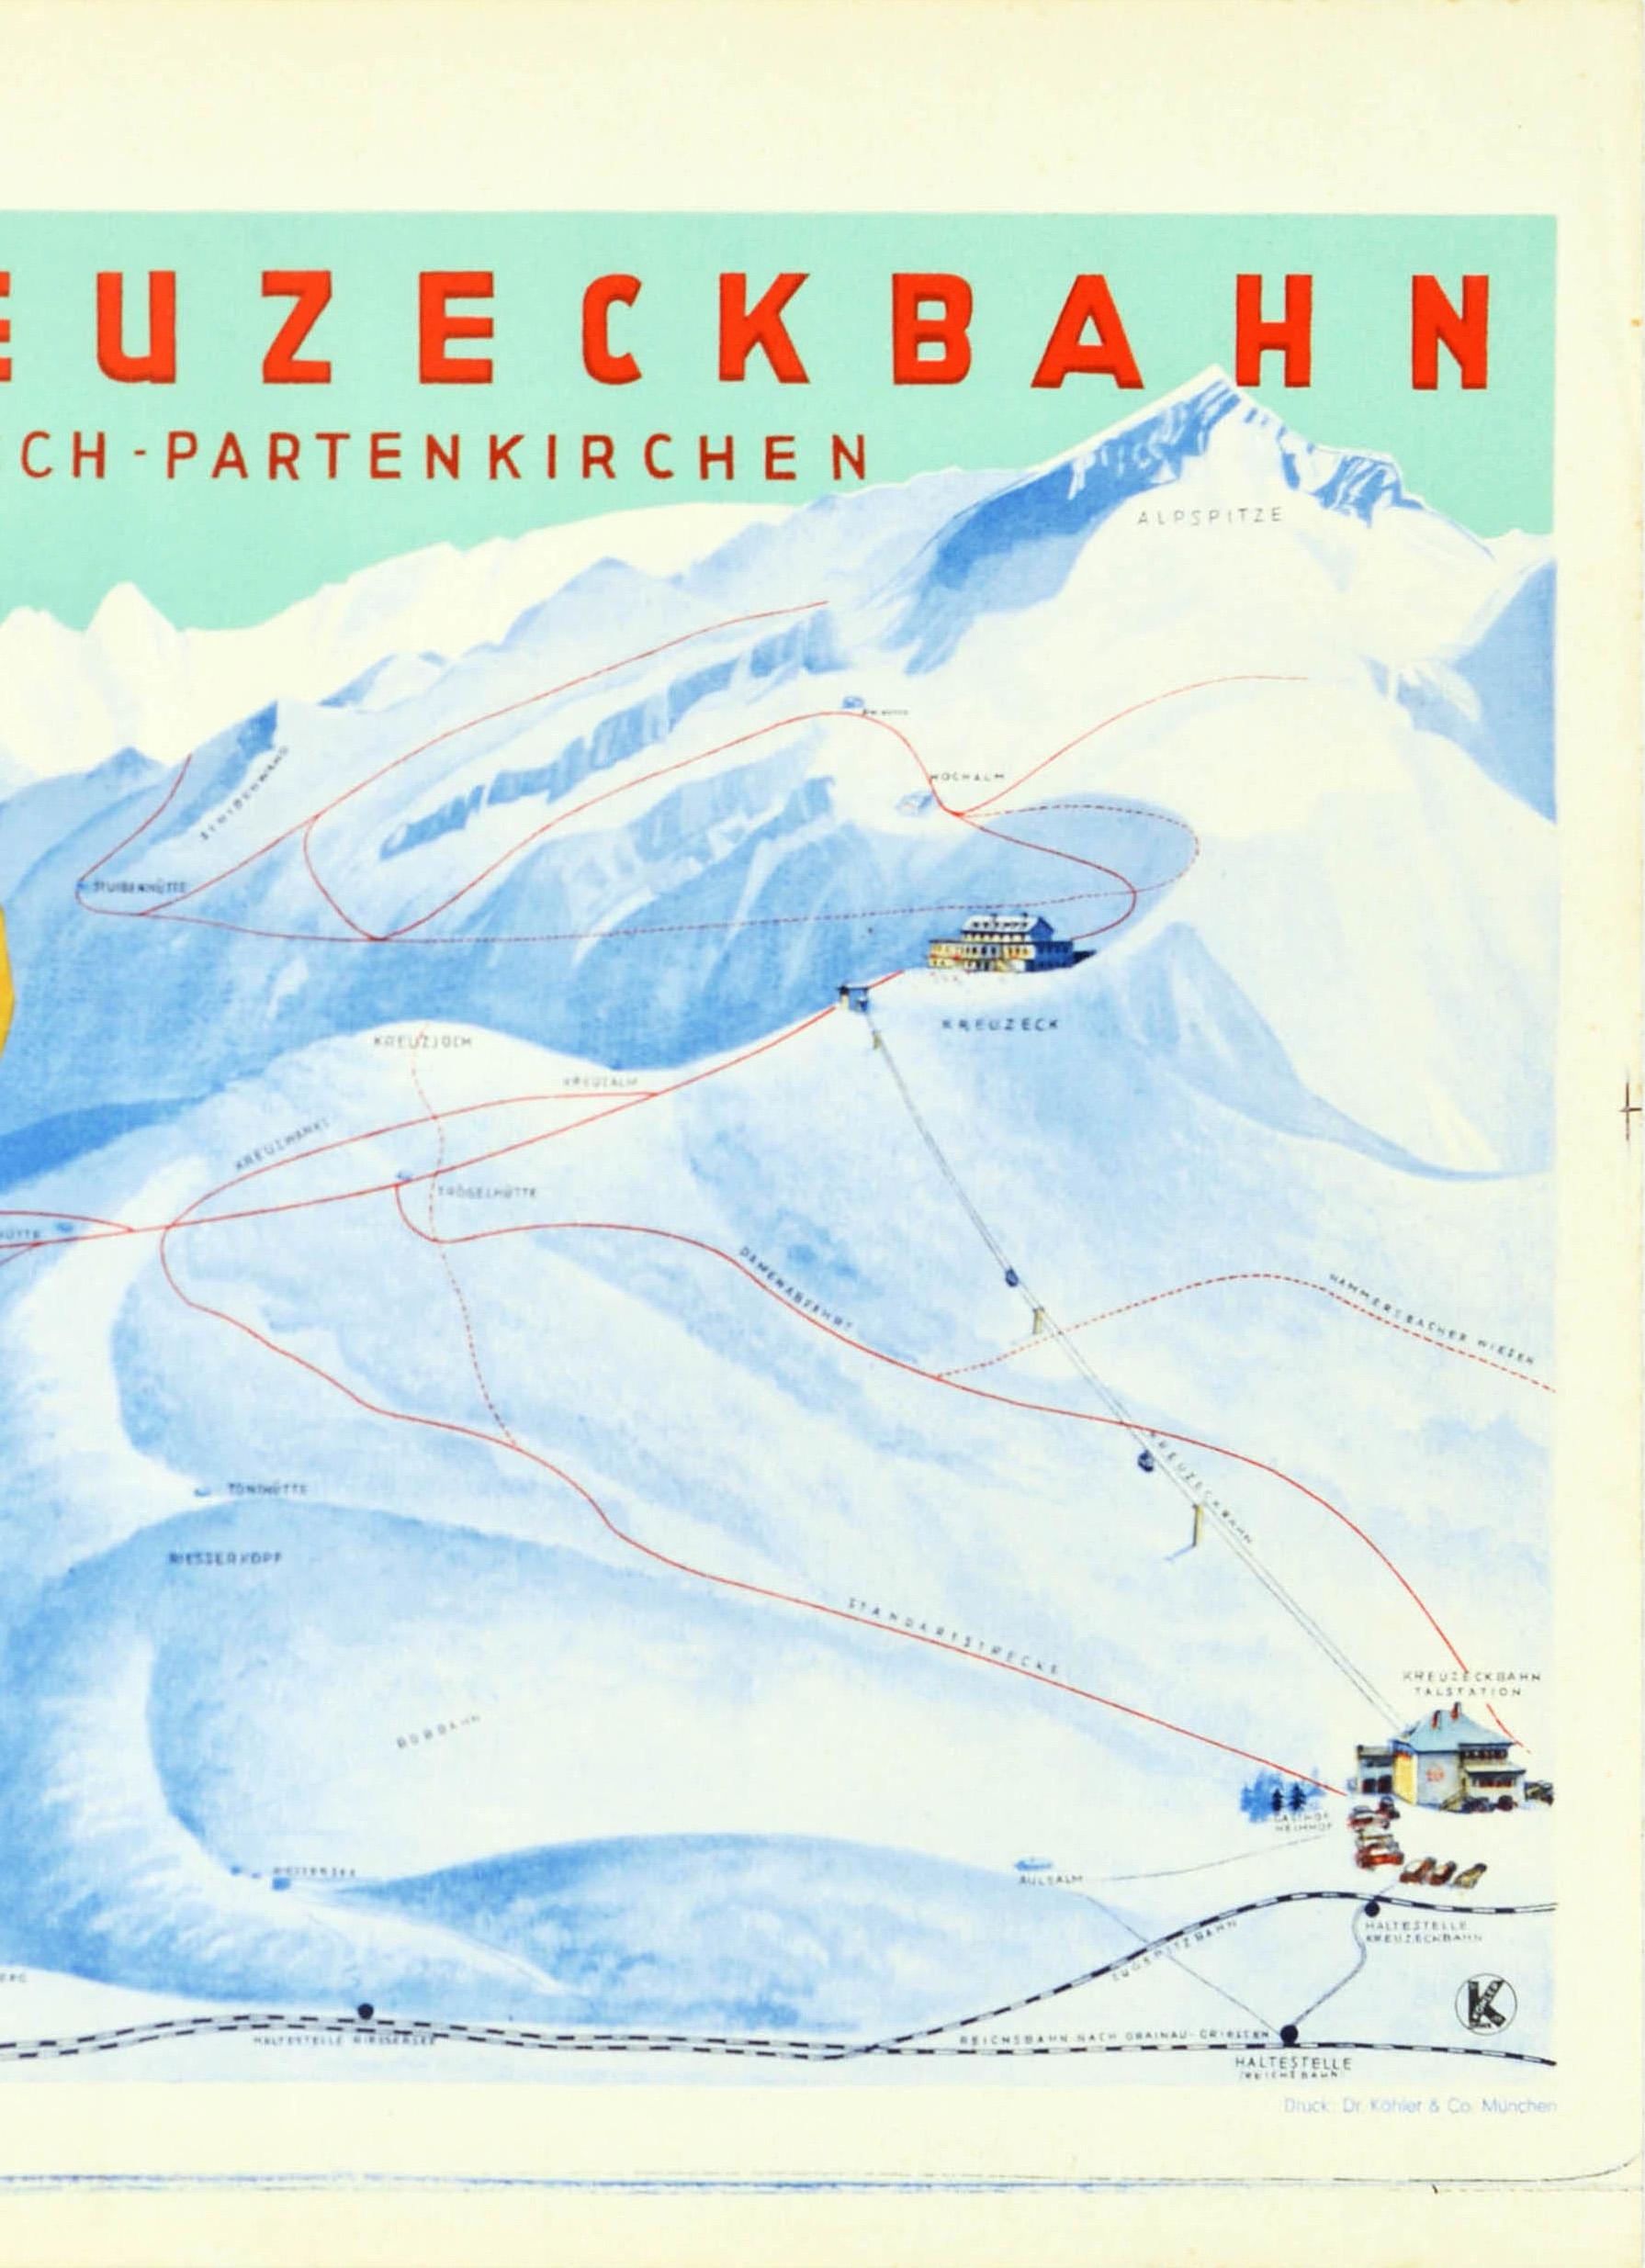 German Original Vintage Poster Kreuzeck Bahn Garmisch Partenkirchen Skiing Cable Car For Sale